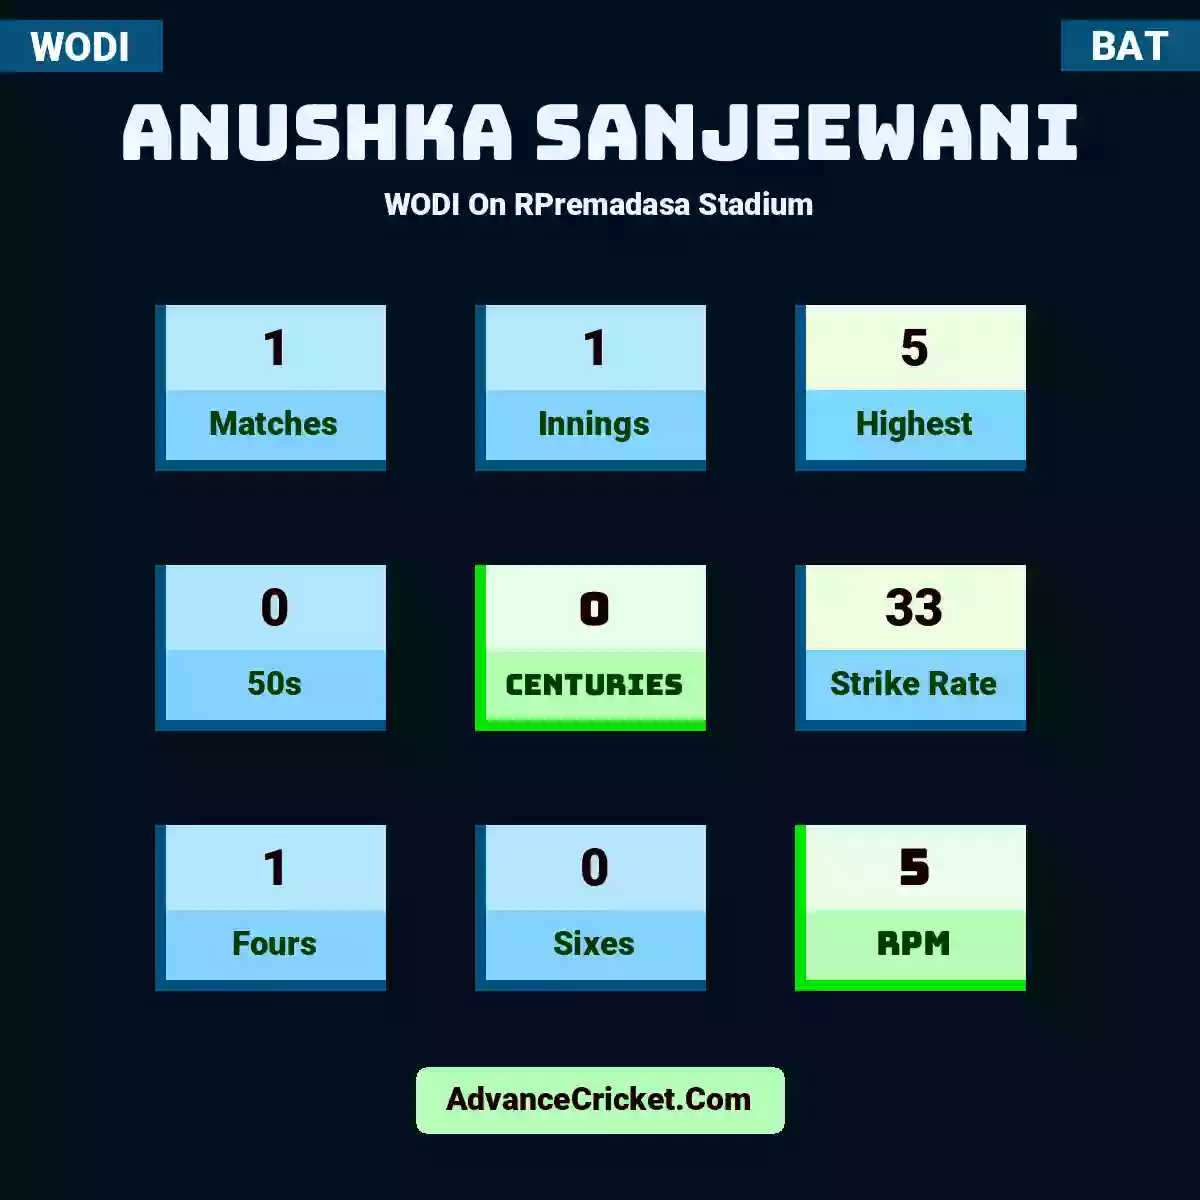 Anushka Sanjeewani WODI  On RPremadasa Stadium, Anushka Sanjeewani played 1 matches, scored 5 runs as highest, 0 half-centuries, and 0 centuries, with a strike rate of 33. A.Sanjeewani hit 1 fours and 0 sixes, with an RPM of 5.